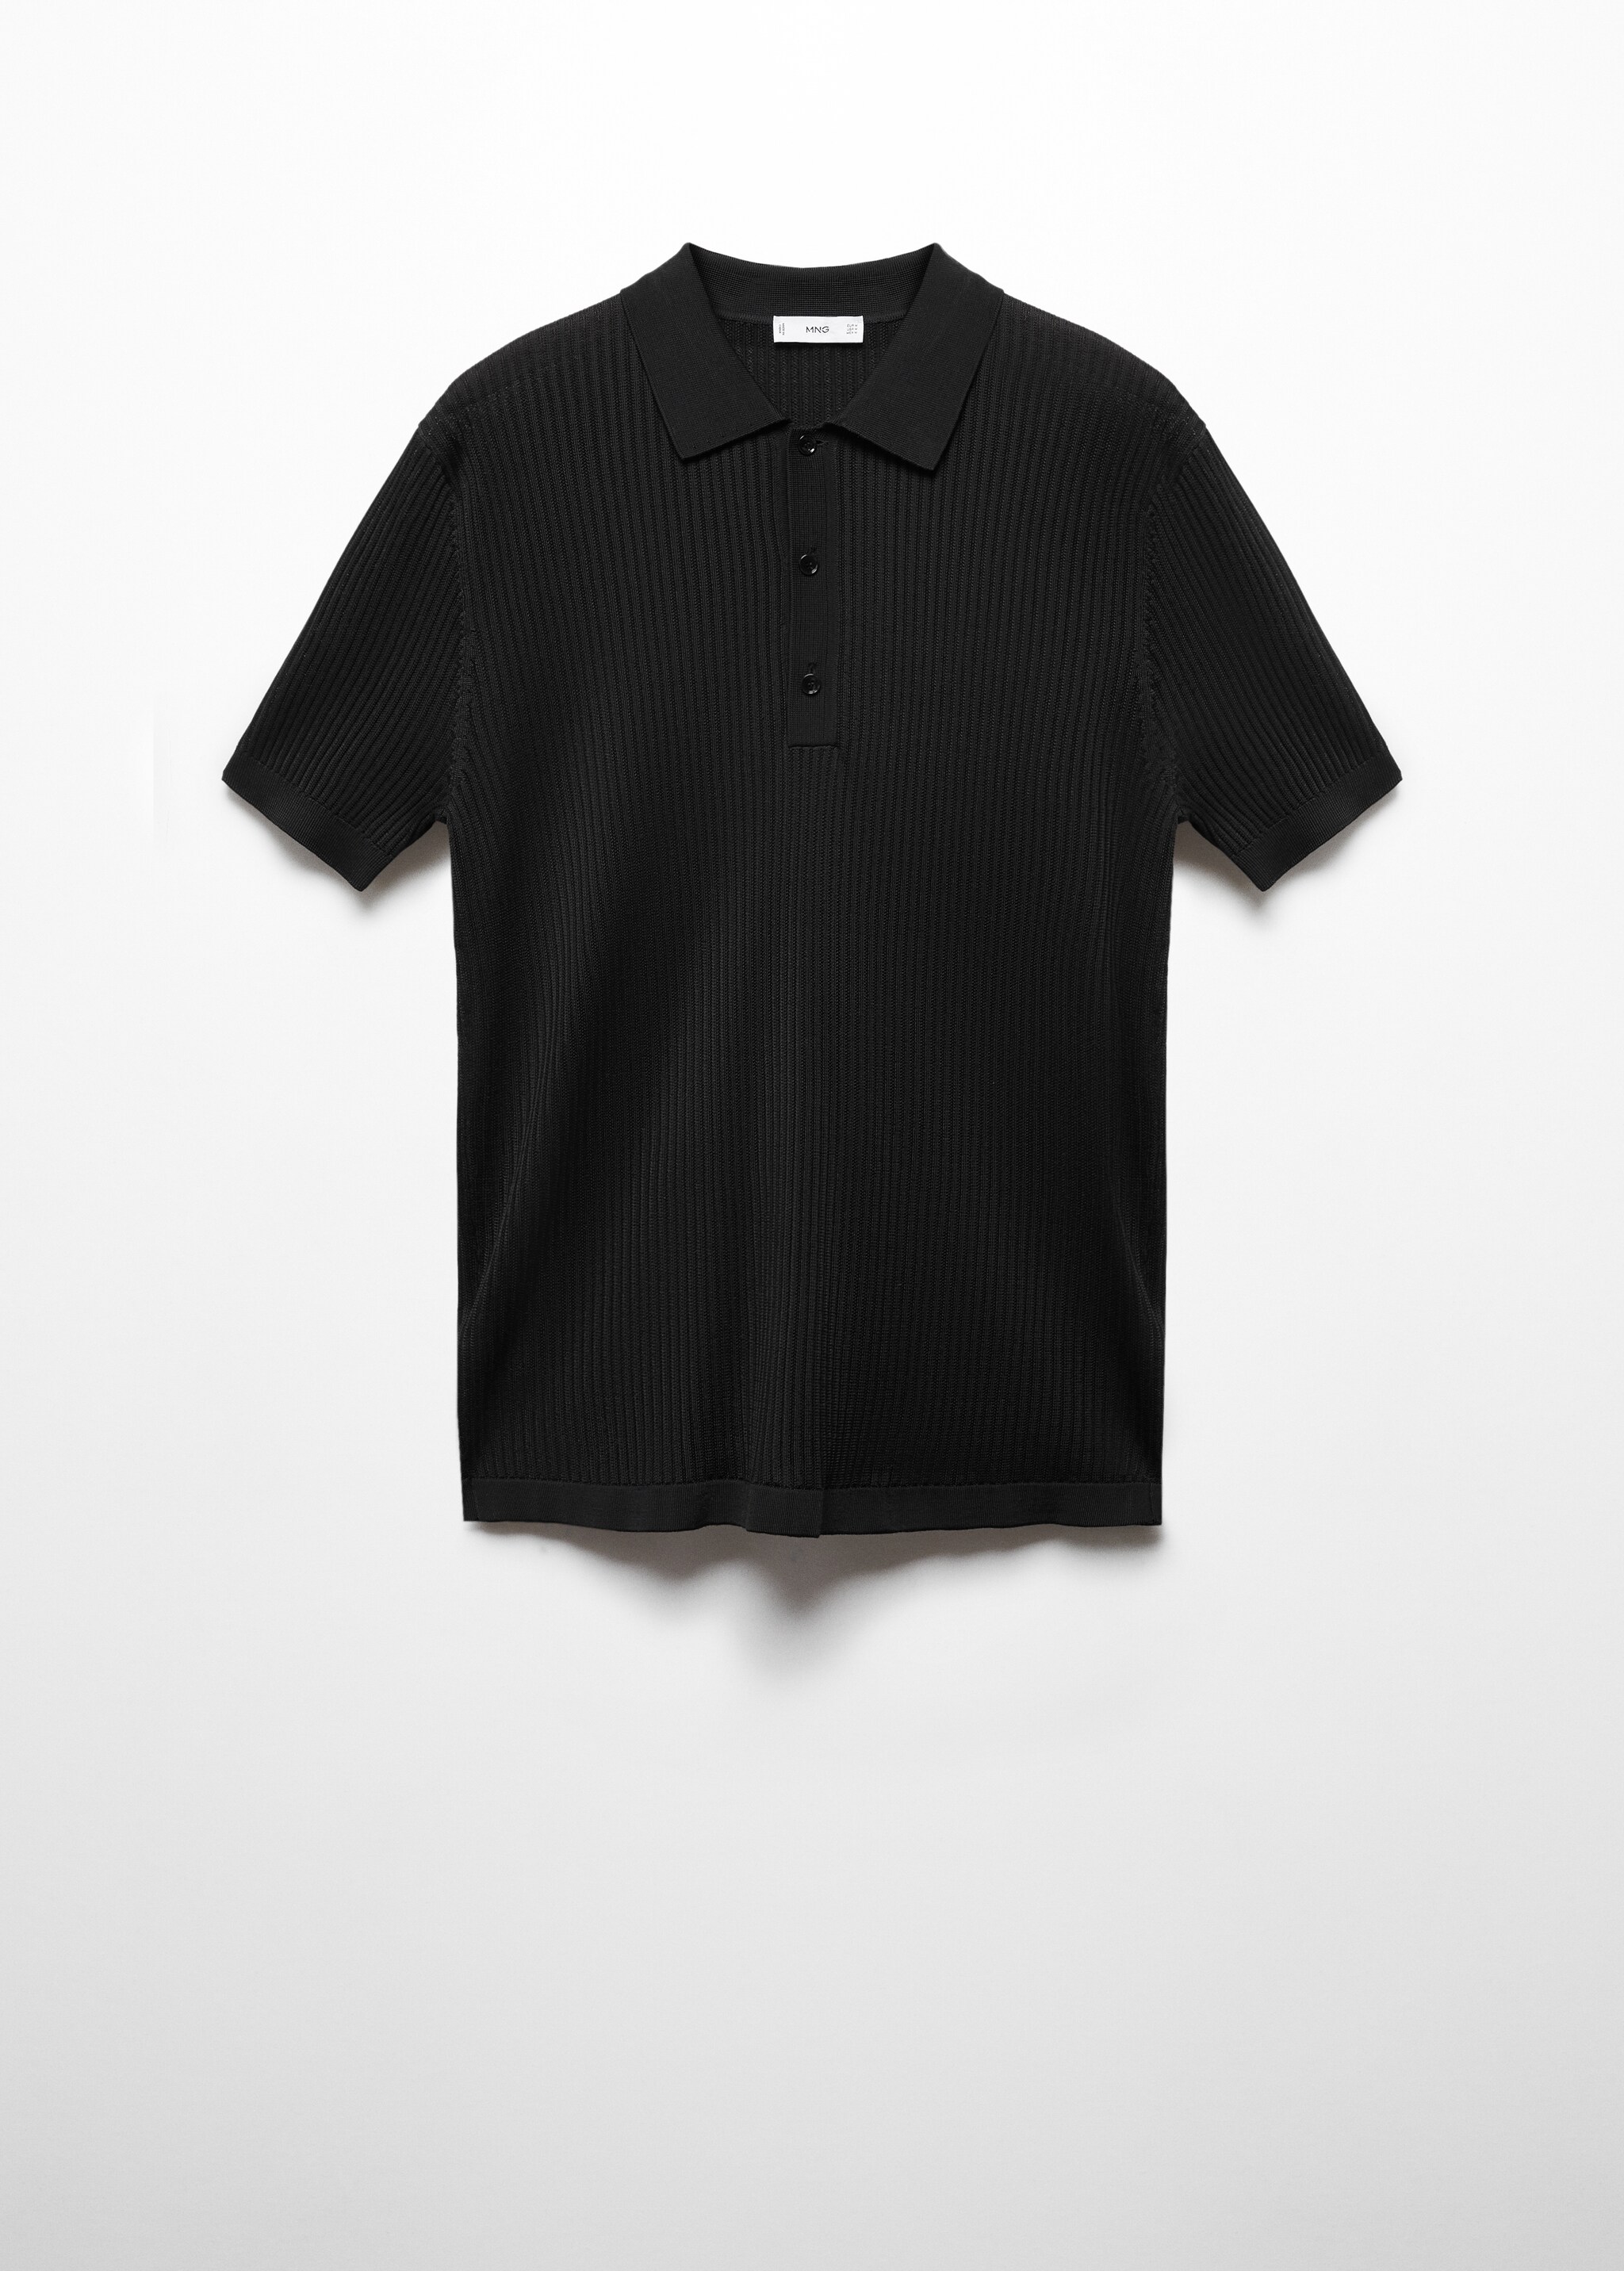 Pamuklu triko polo gömlek - Modelsiz ürün